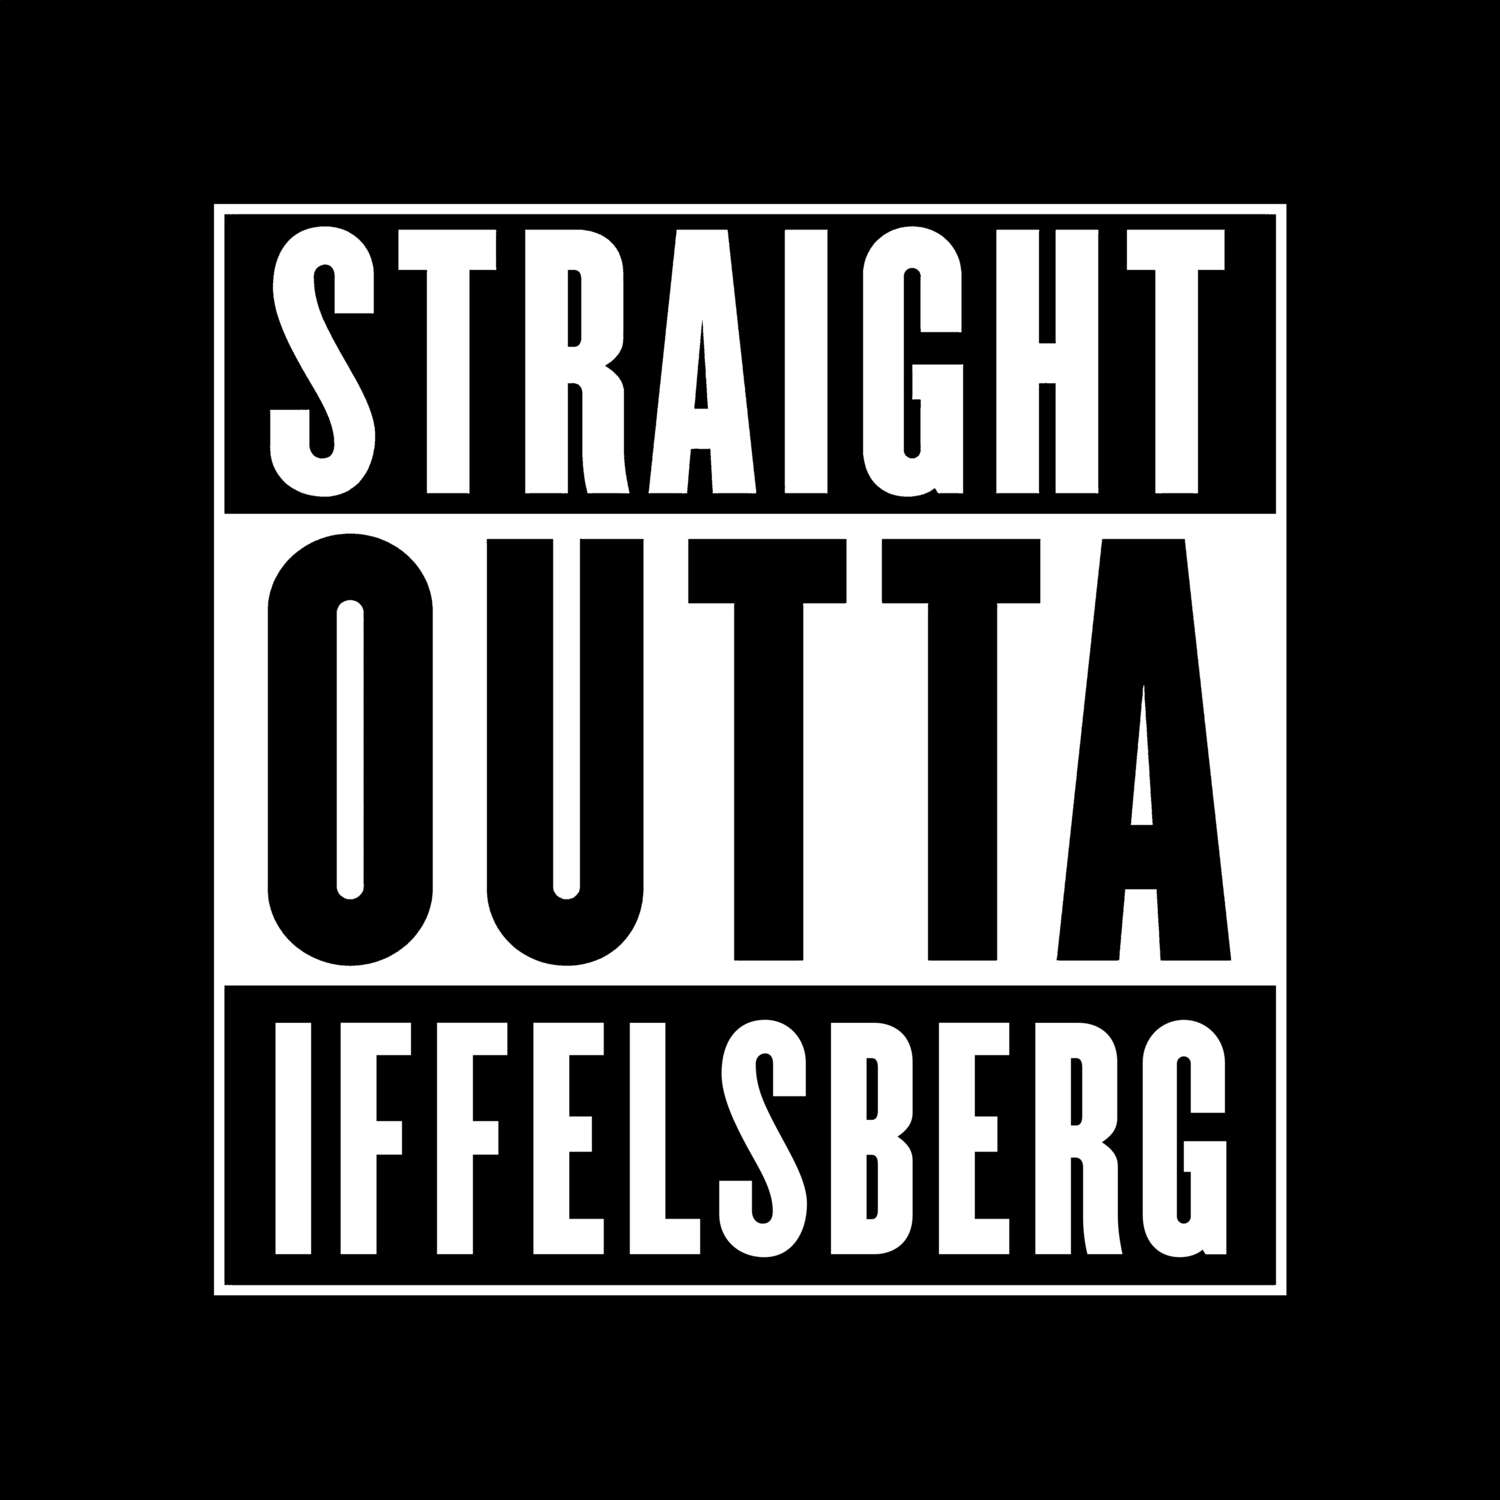 Iffelsberg T-Shirt »Straight Outta«